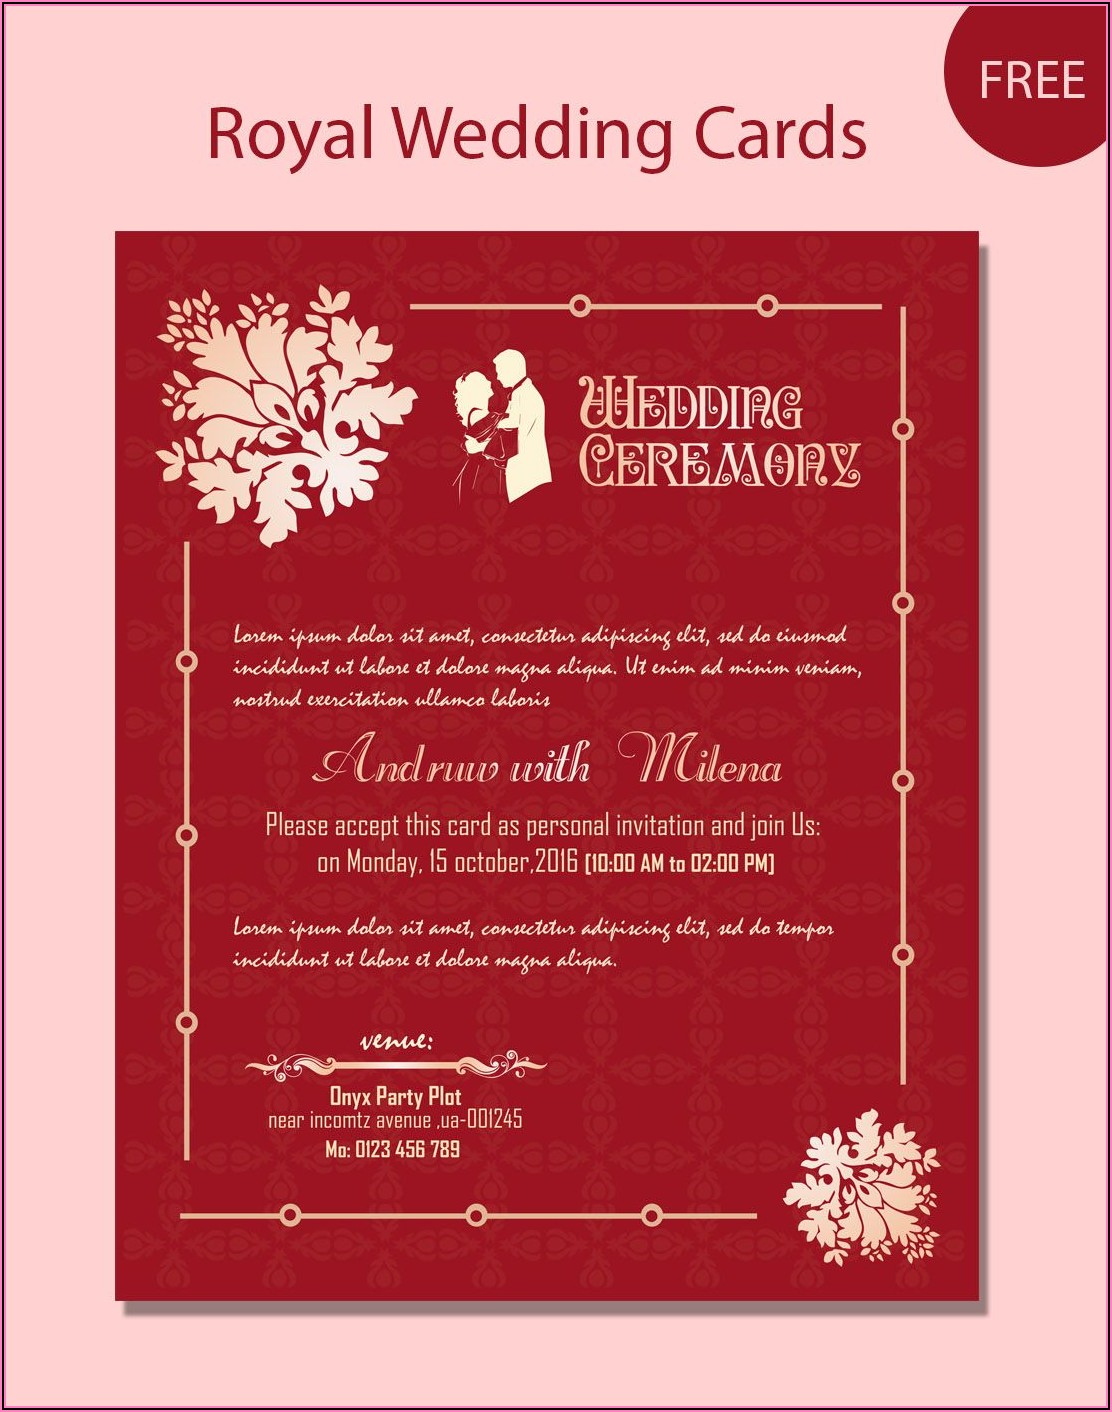 Hindu Wedding Invitation Card Template